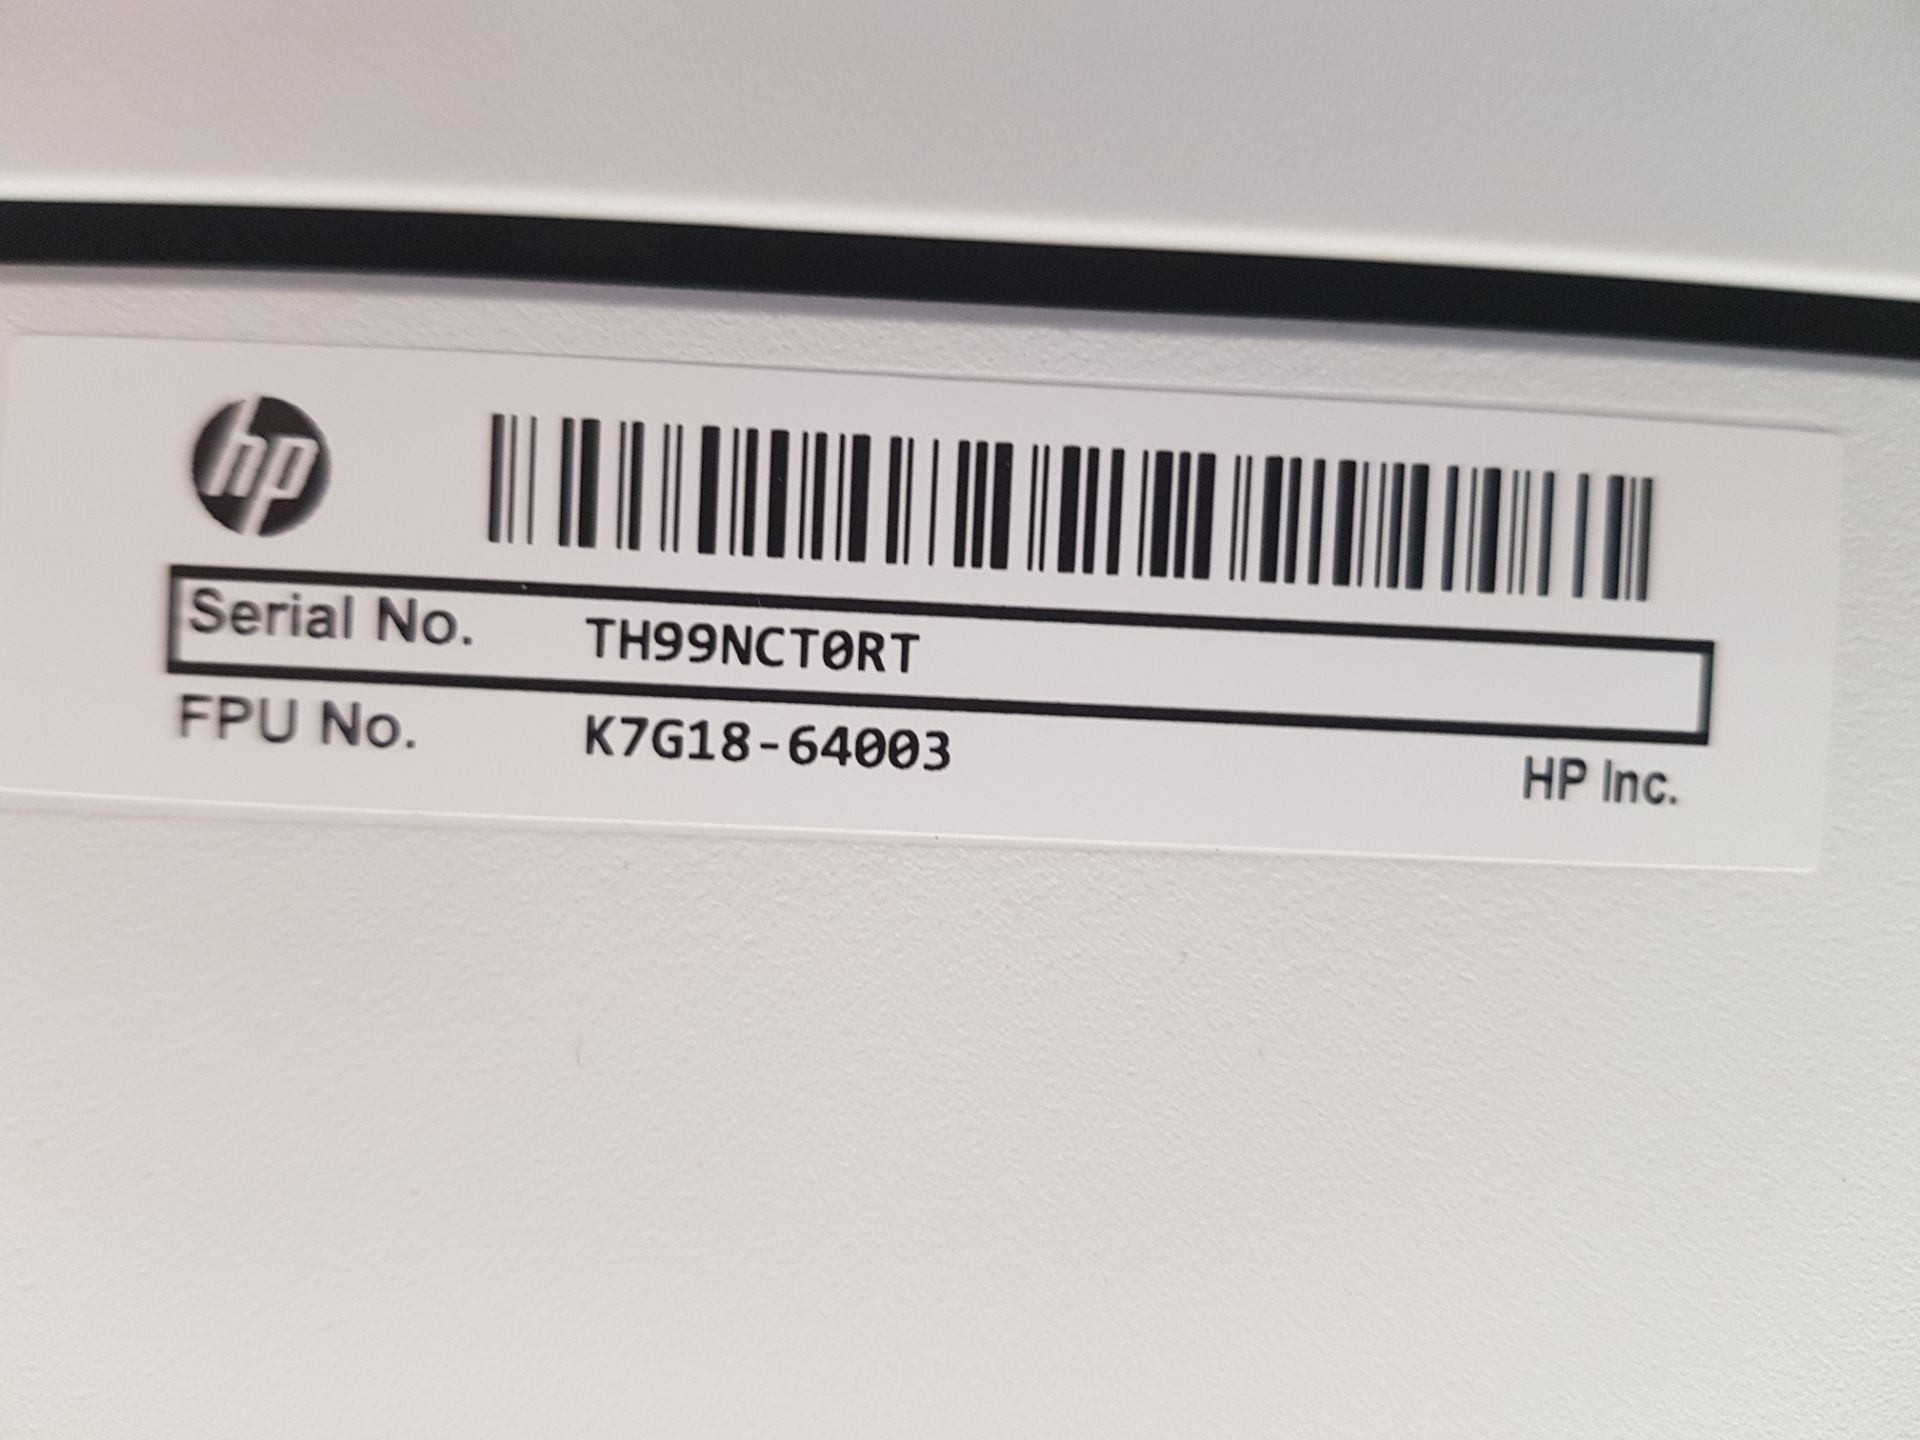 HP Photo Copier/Scanner - Image 5 of 5